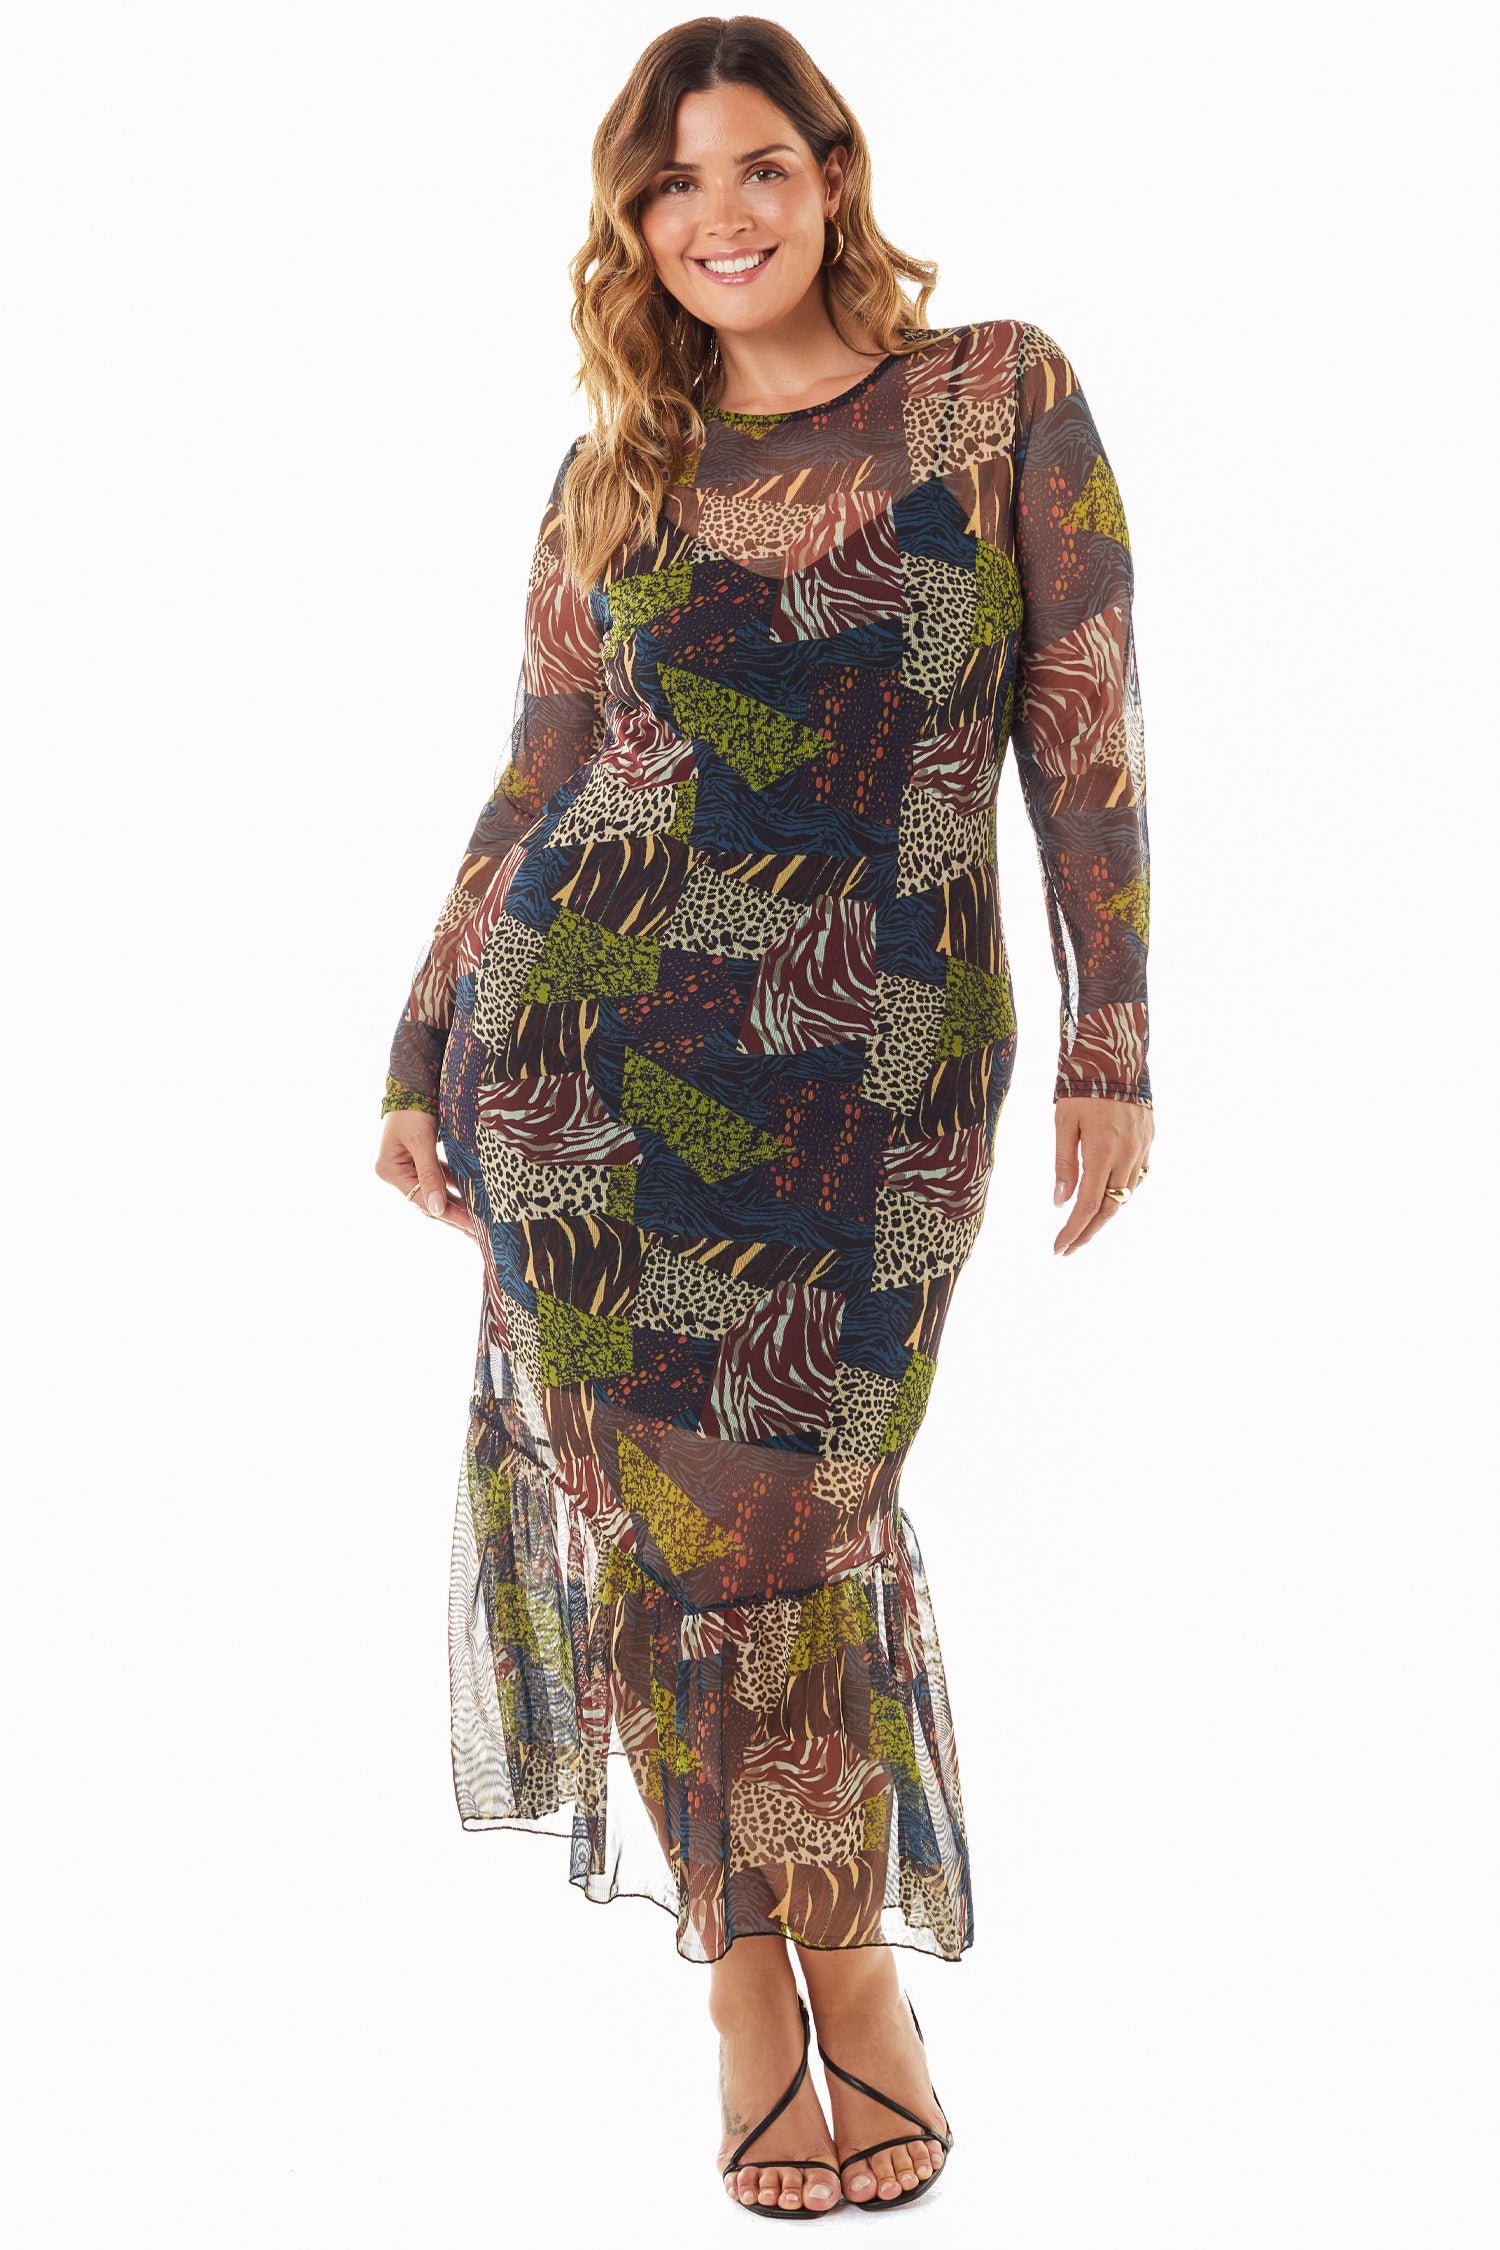 Model wearing Fiona Animal Mesh Dress standing facing the camera